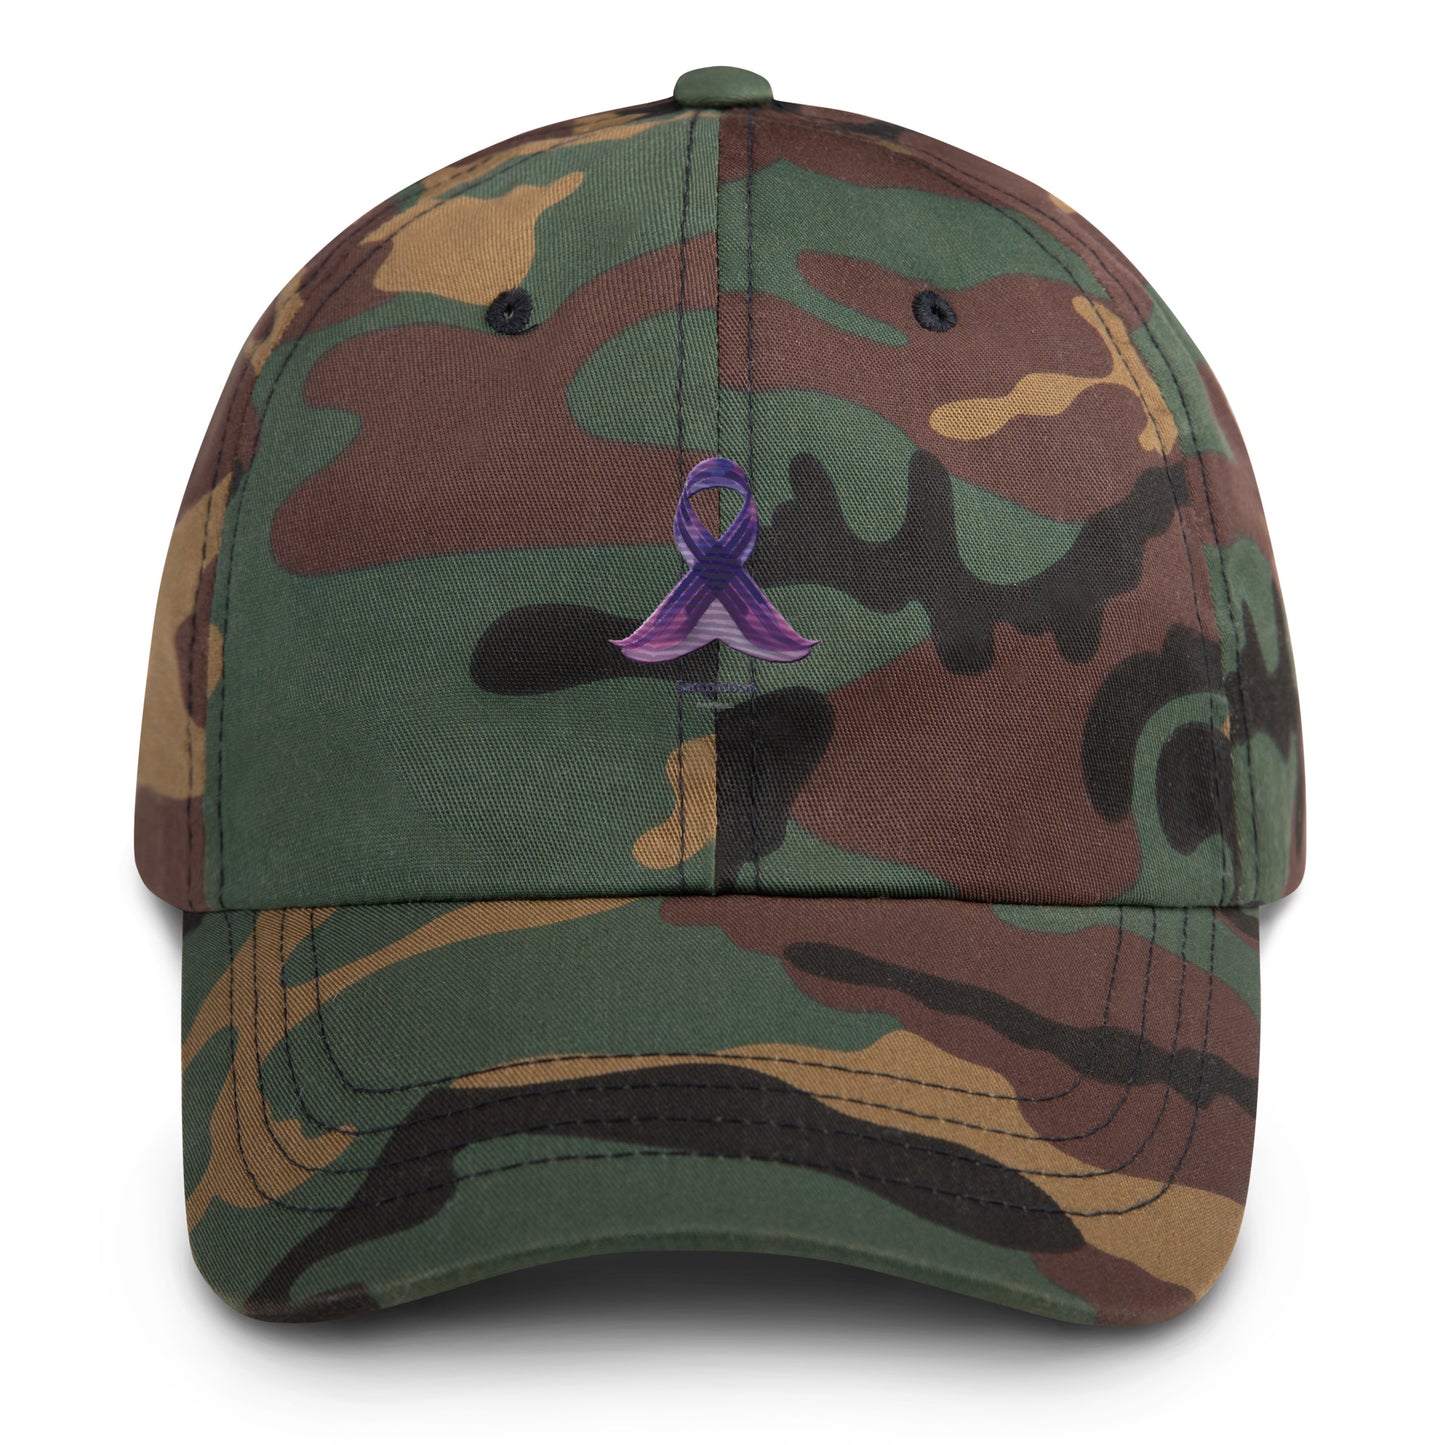 I Sport Purple For Sarcoidosis Awareness Royal Ribbon Dad Cap